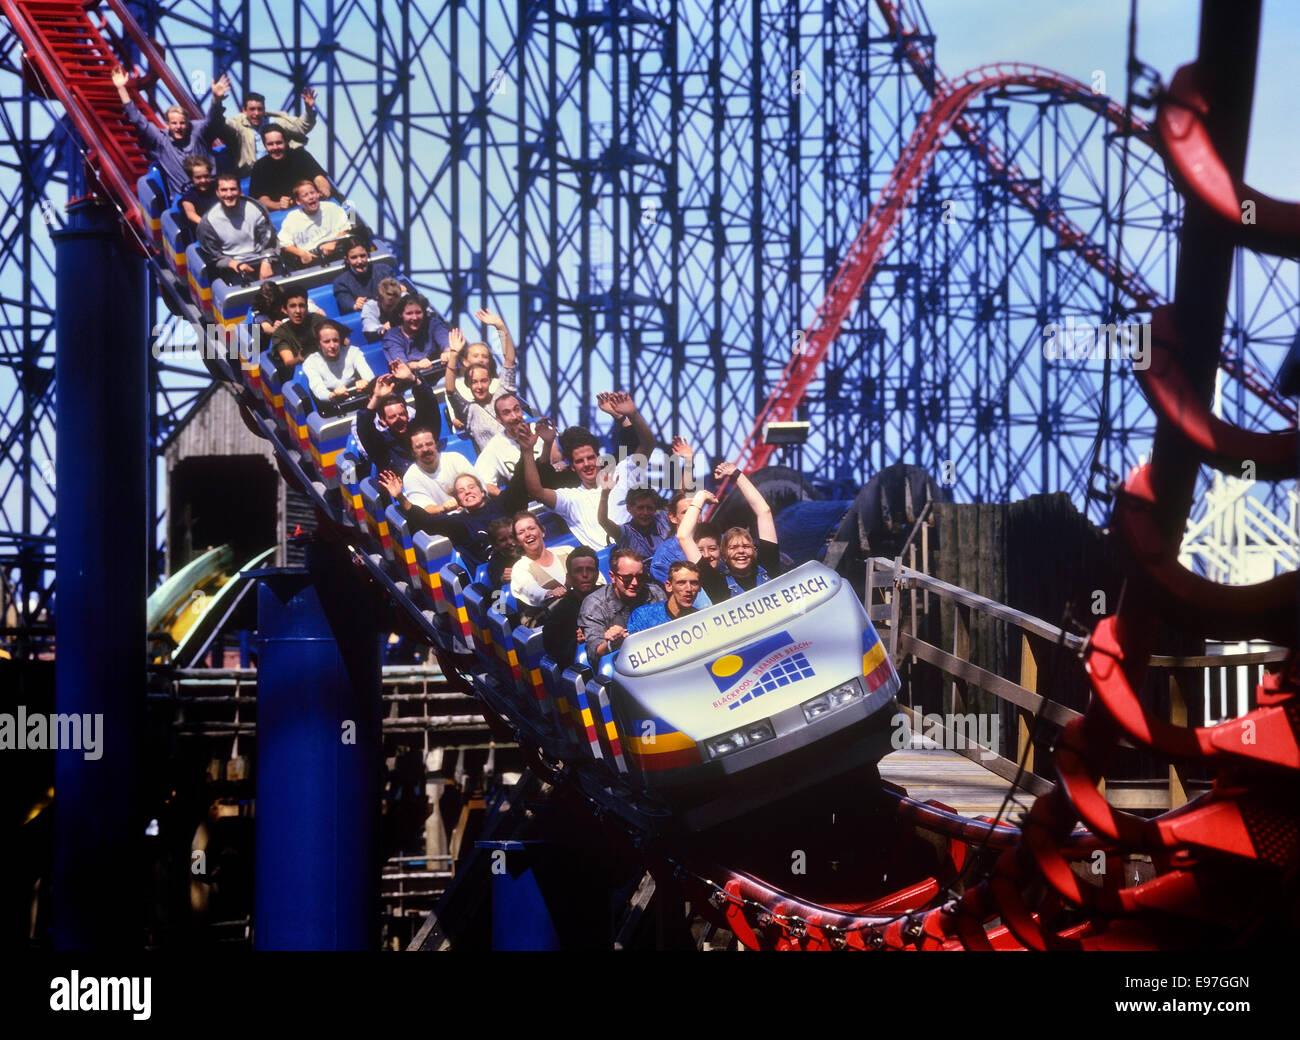 The Big One Steel Roller Coaster Blackpool Pleasure Beach Lancashire